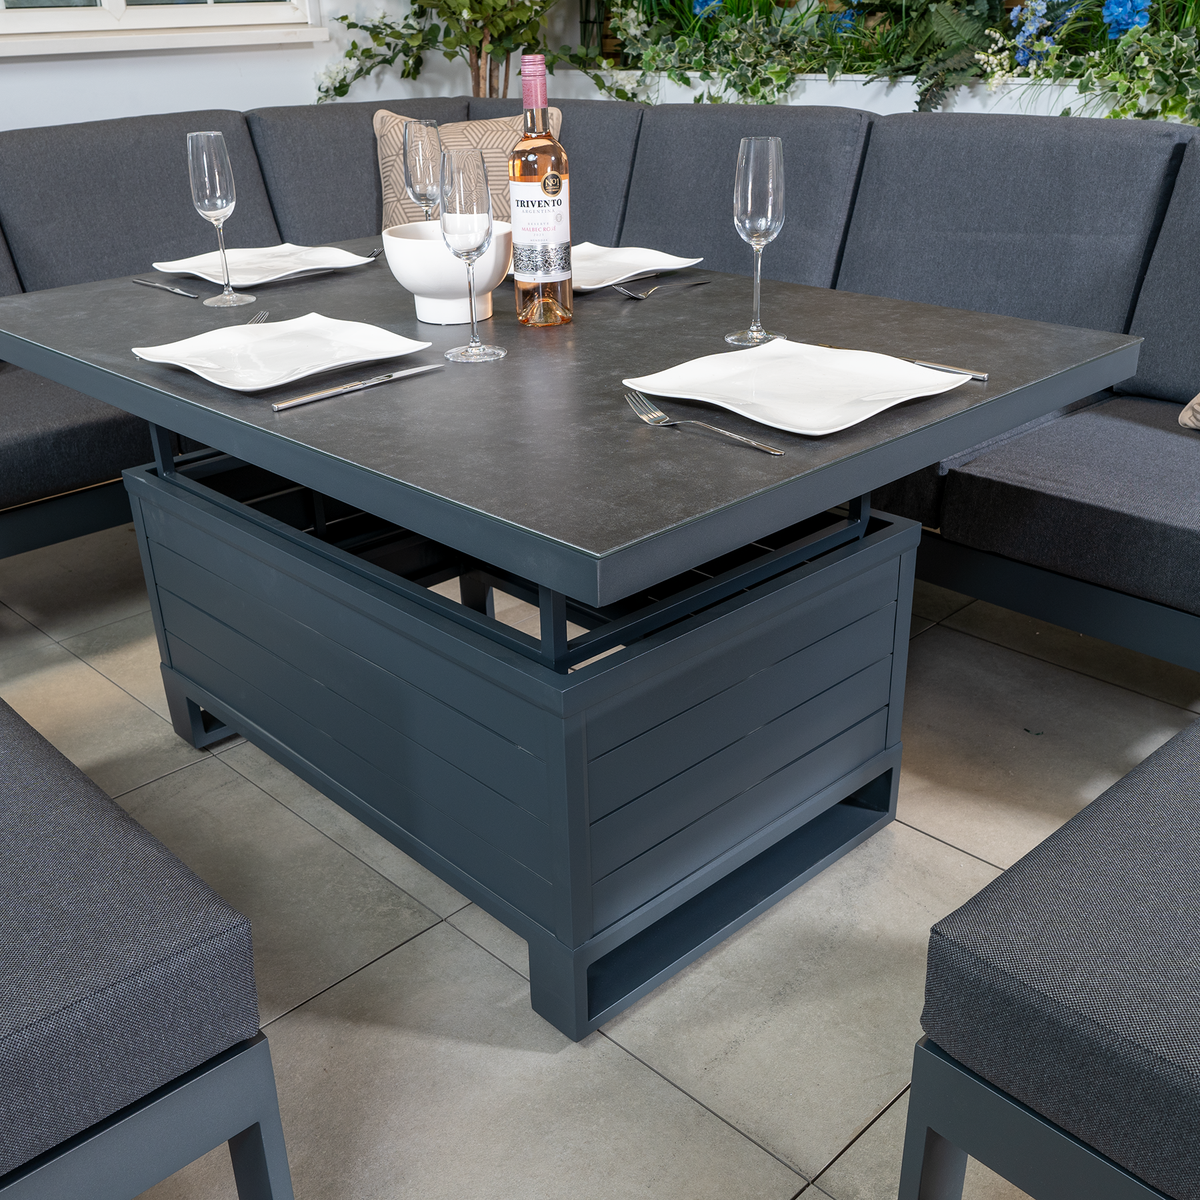 Bracken Outdoors Portland Aluminium Corner Garden Furniture Set with Adjustable Table